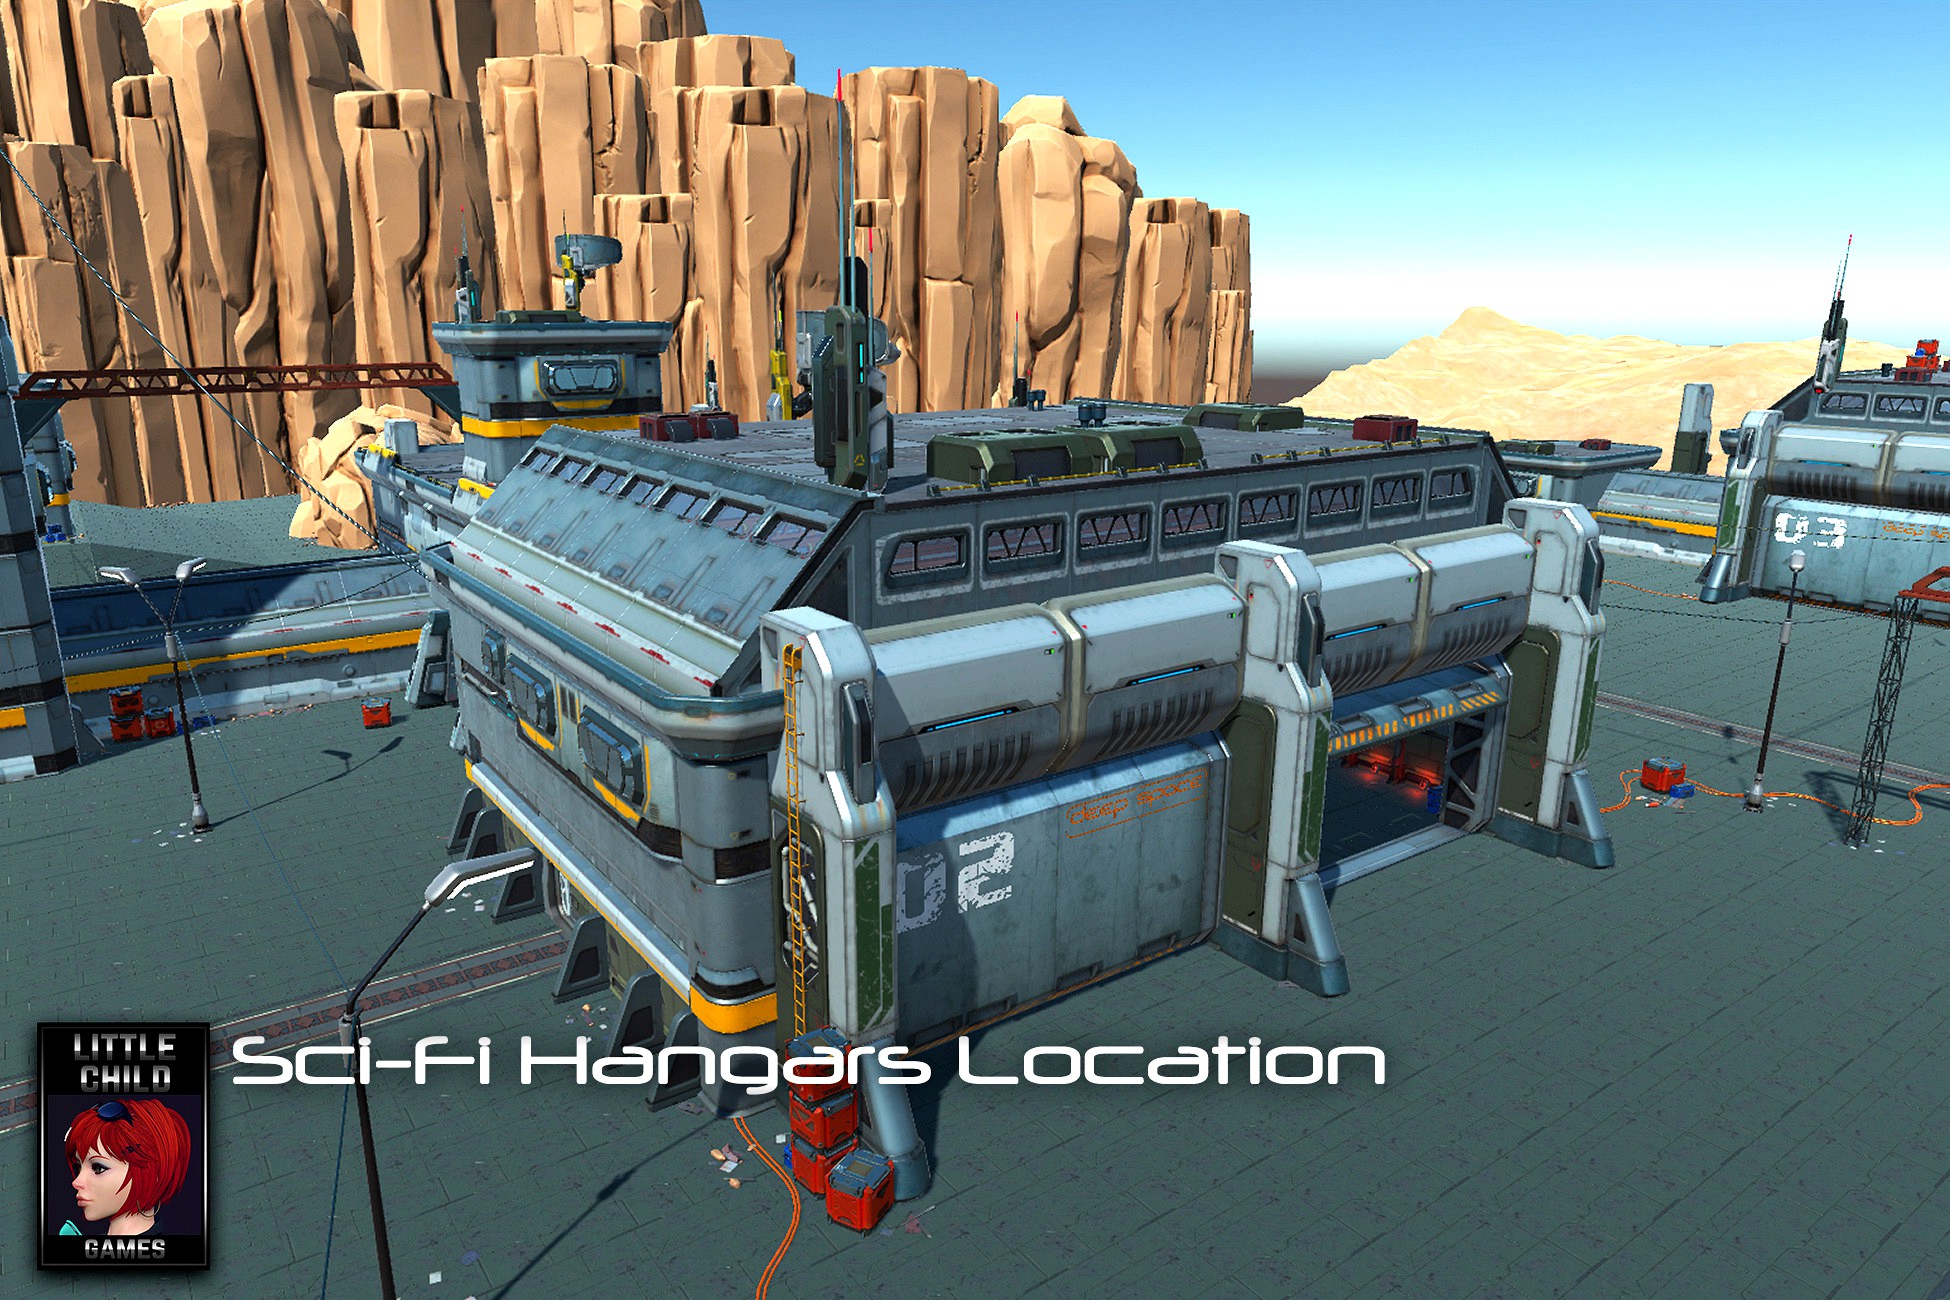 Sci-Fi Modular Hangars Location